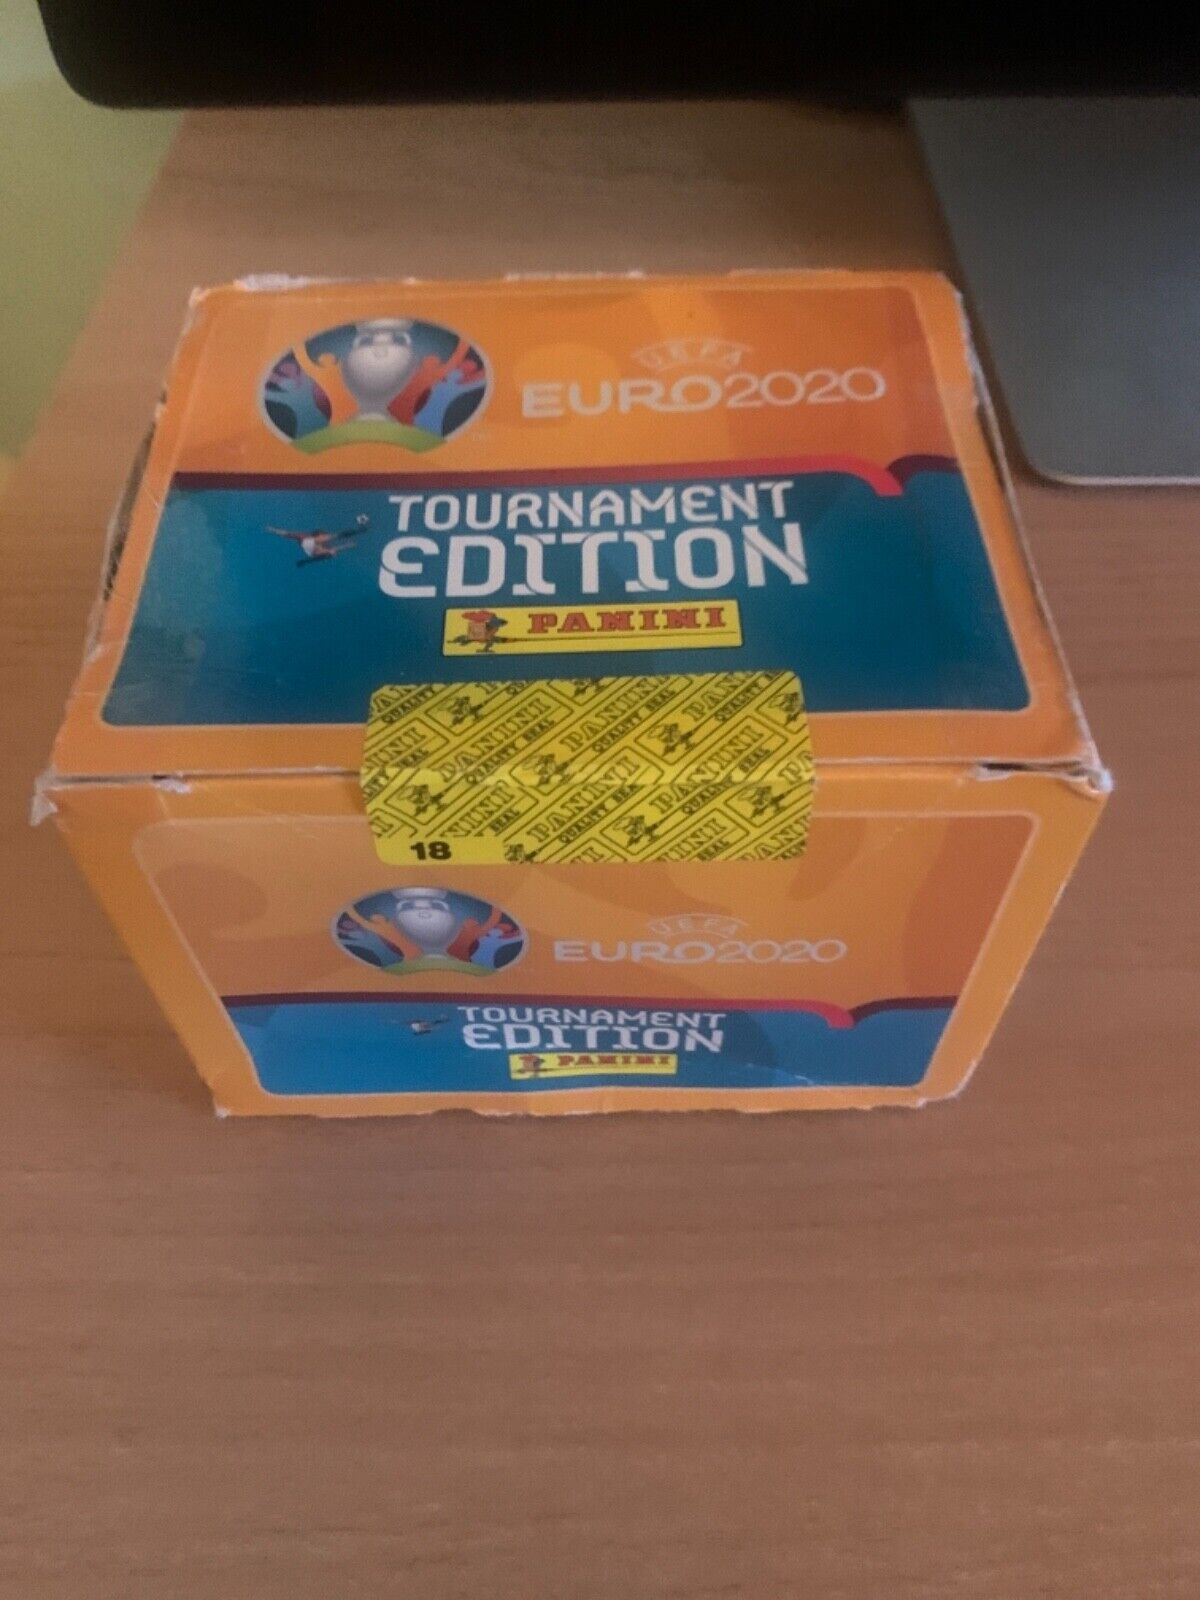 Euro2220 tournament edition box